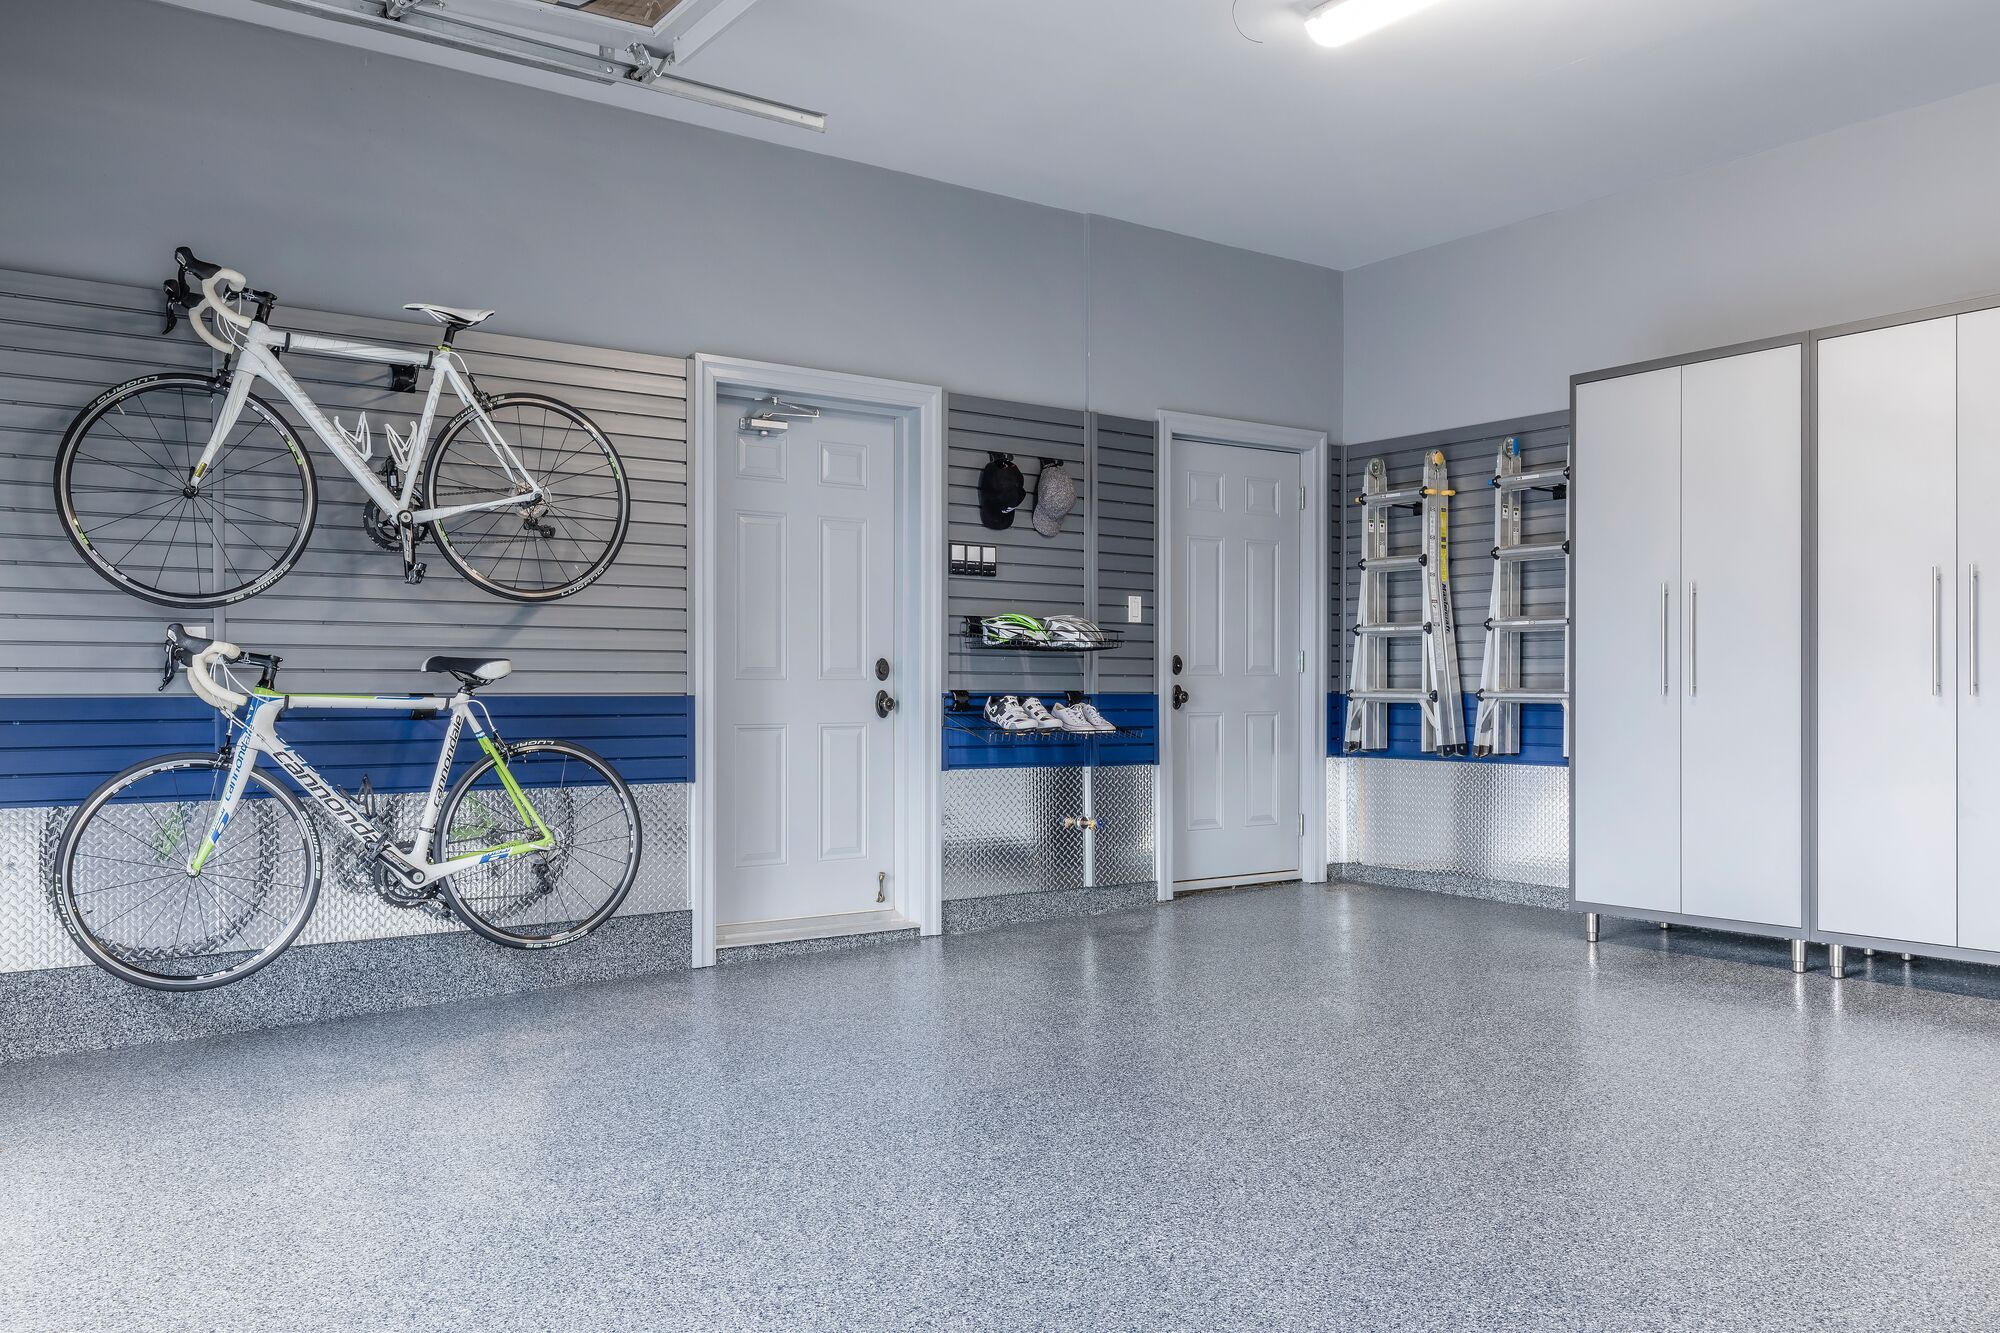 Garage Storage Solutions for Your Bikes - Garage Living